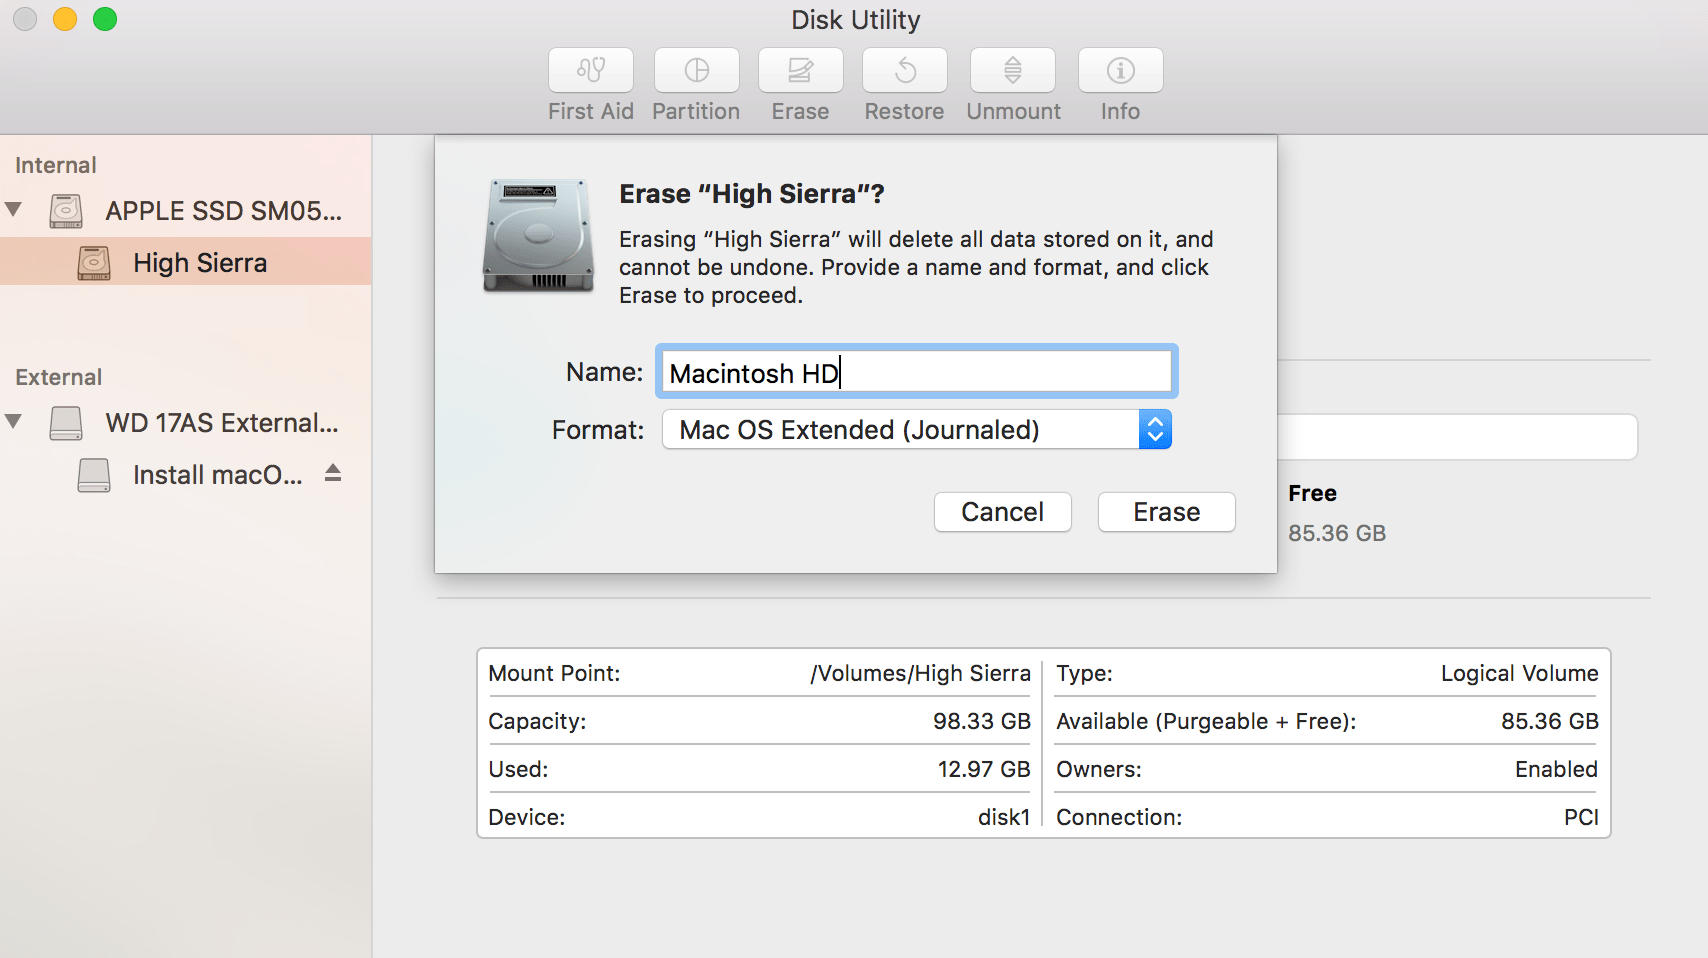 Mac Os 9 Boot Disk Download